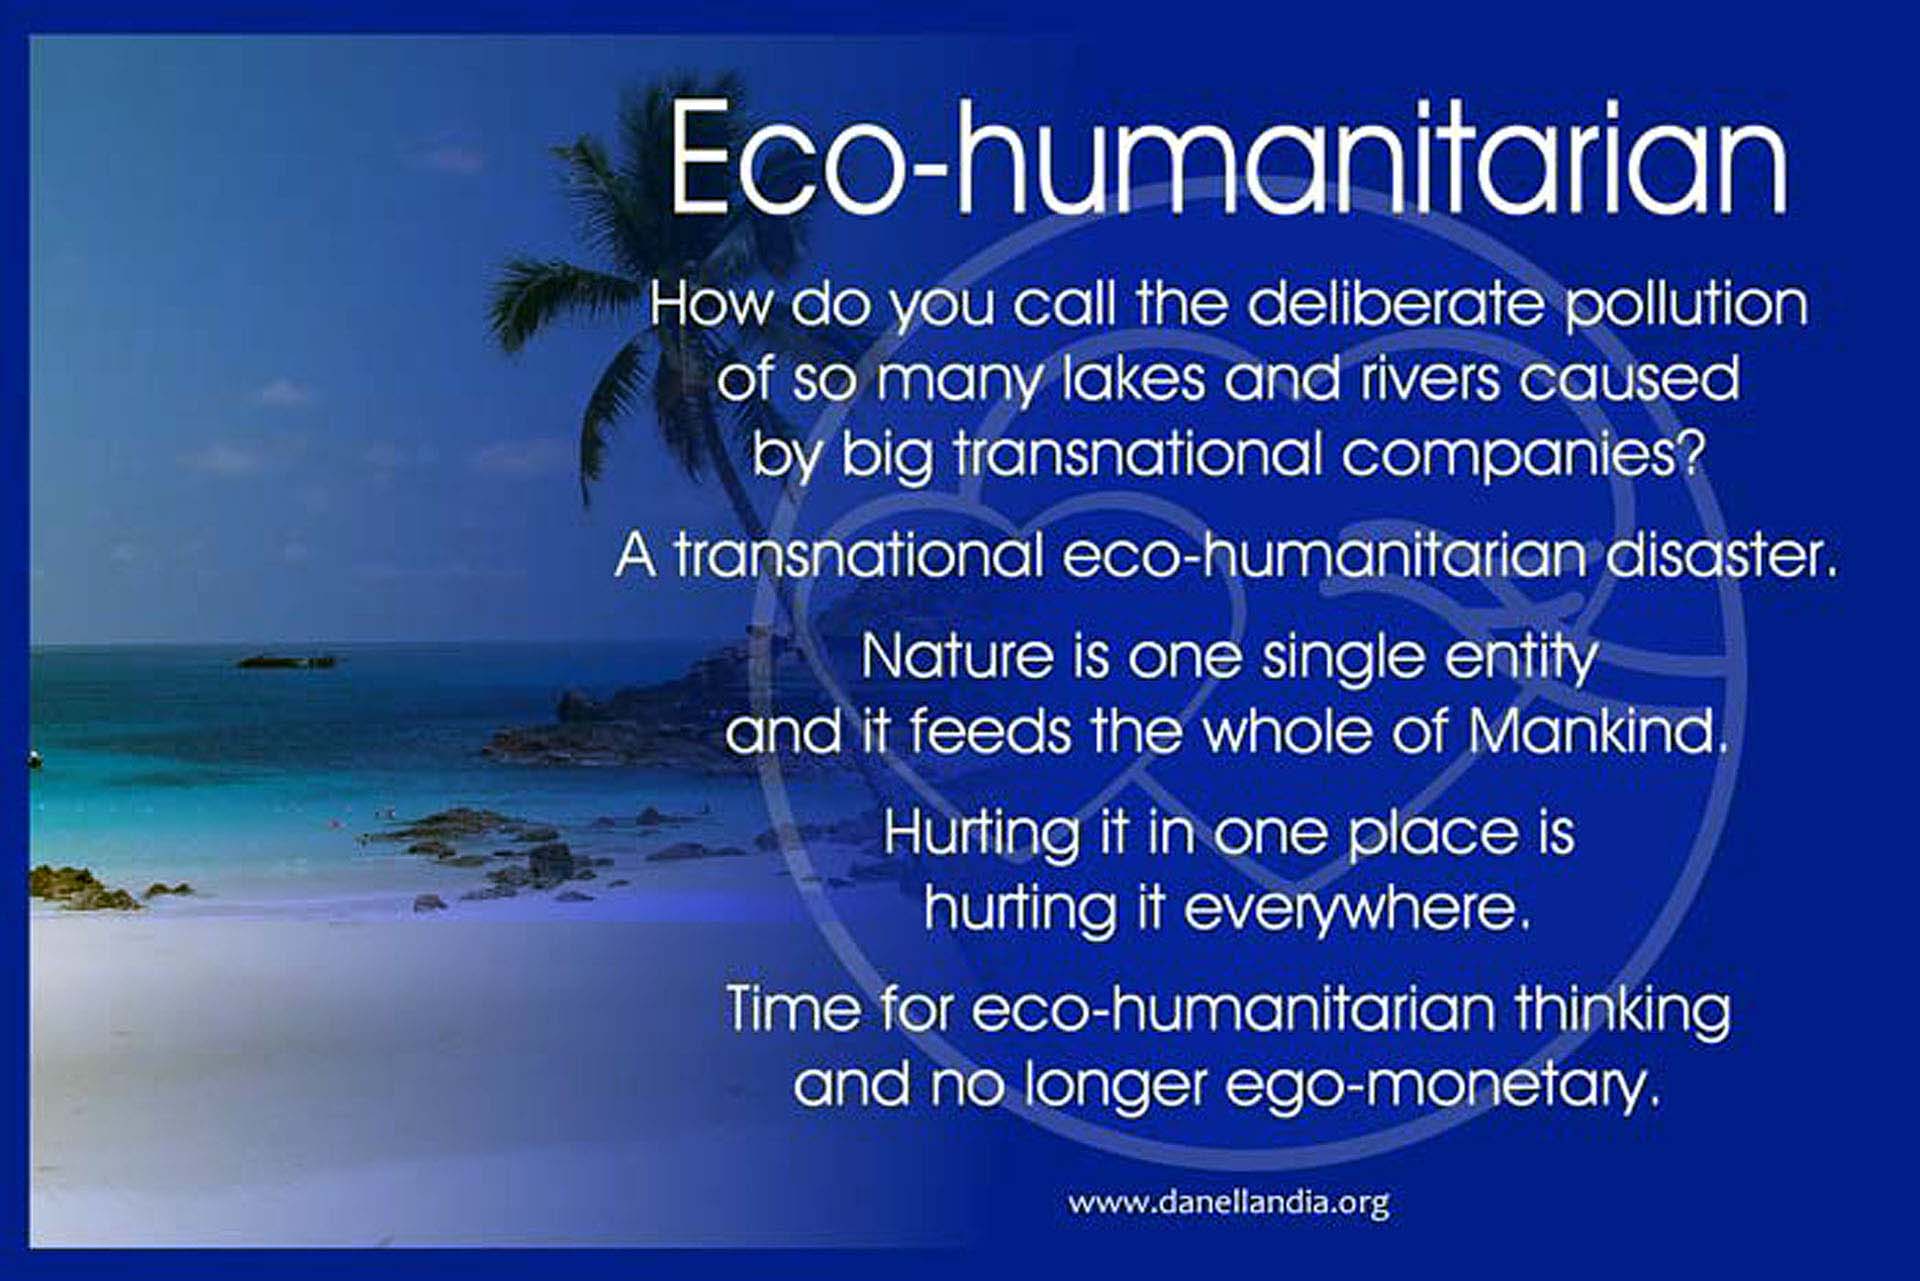 Eco-humanitarian